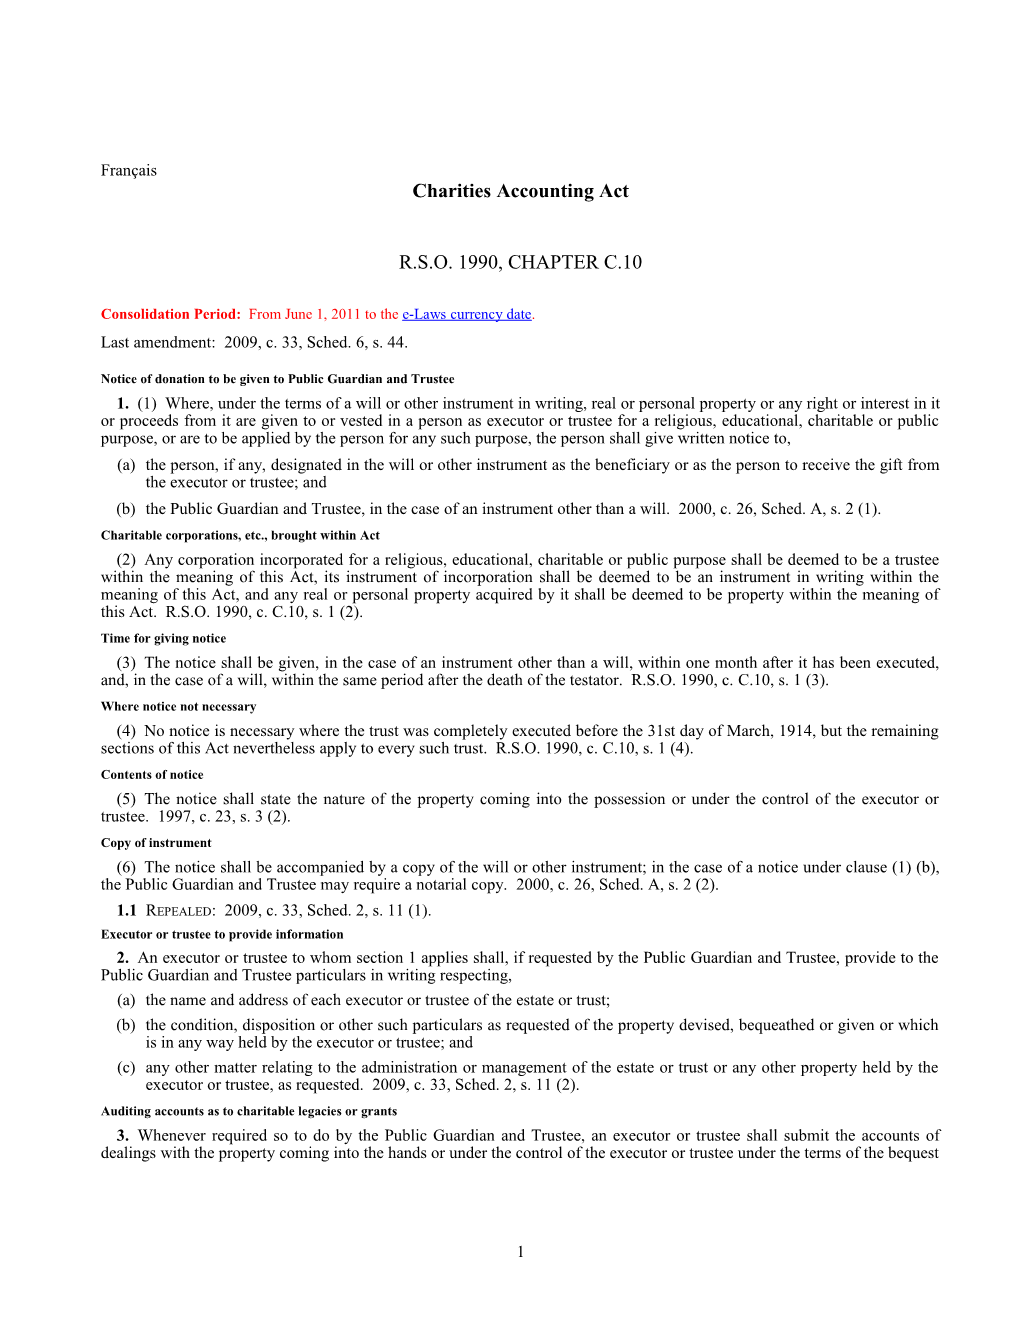 Charities Accounting Act, R.S.O. 1990, C. C.10